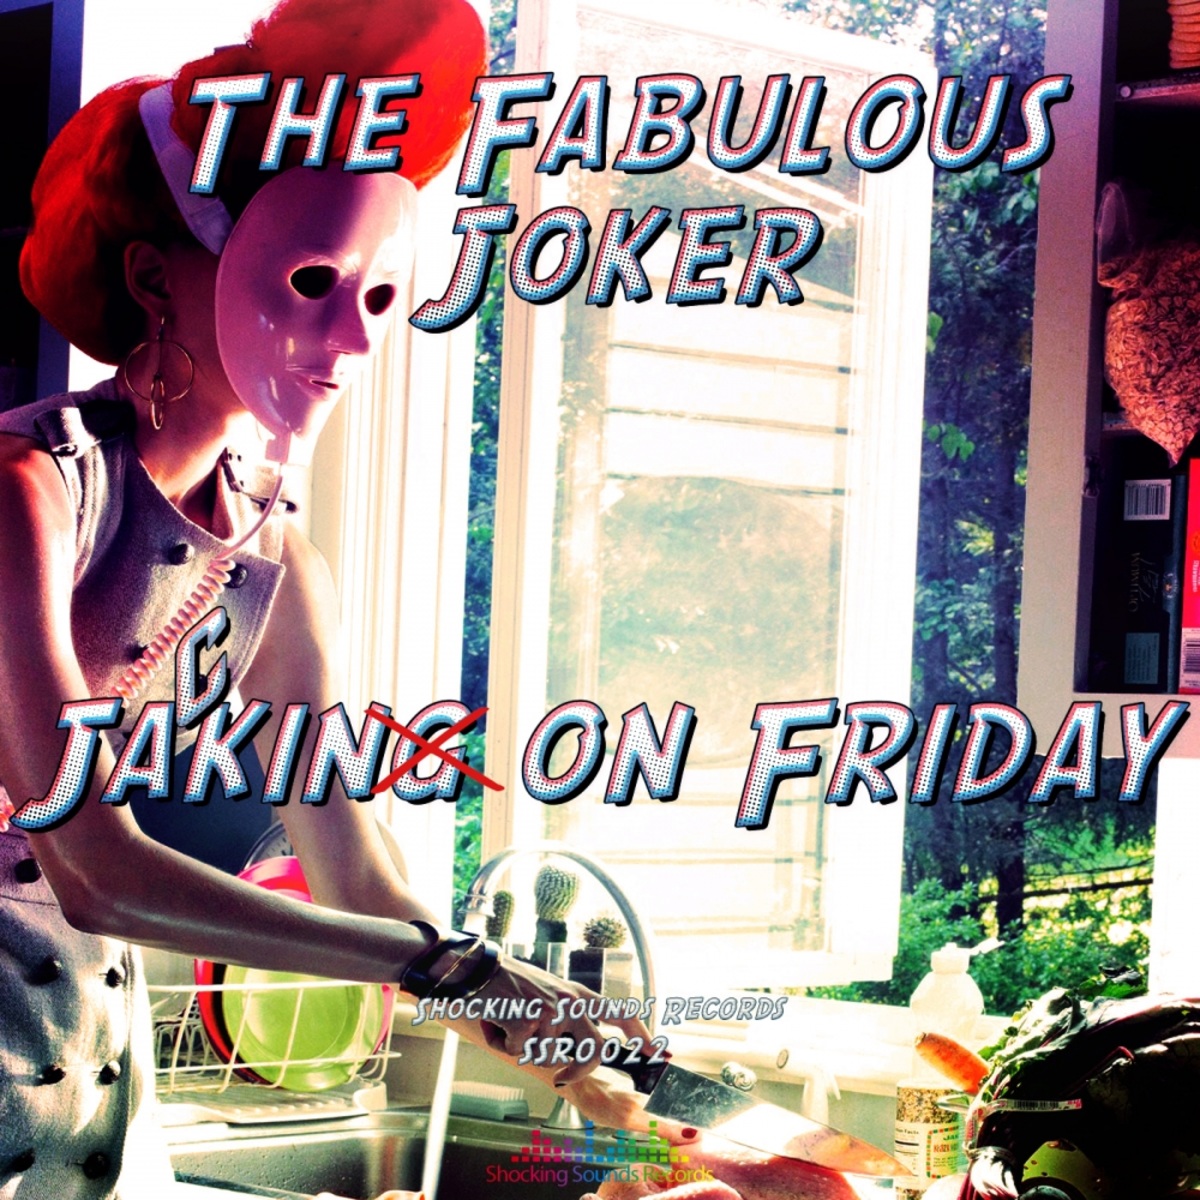 The Fabulous Joker - Jackin On Friday / Shocking Sounds Records